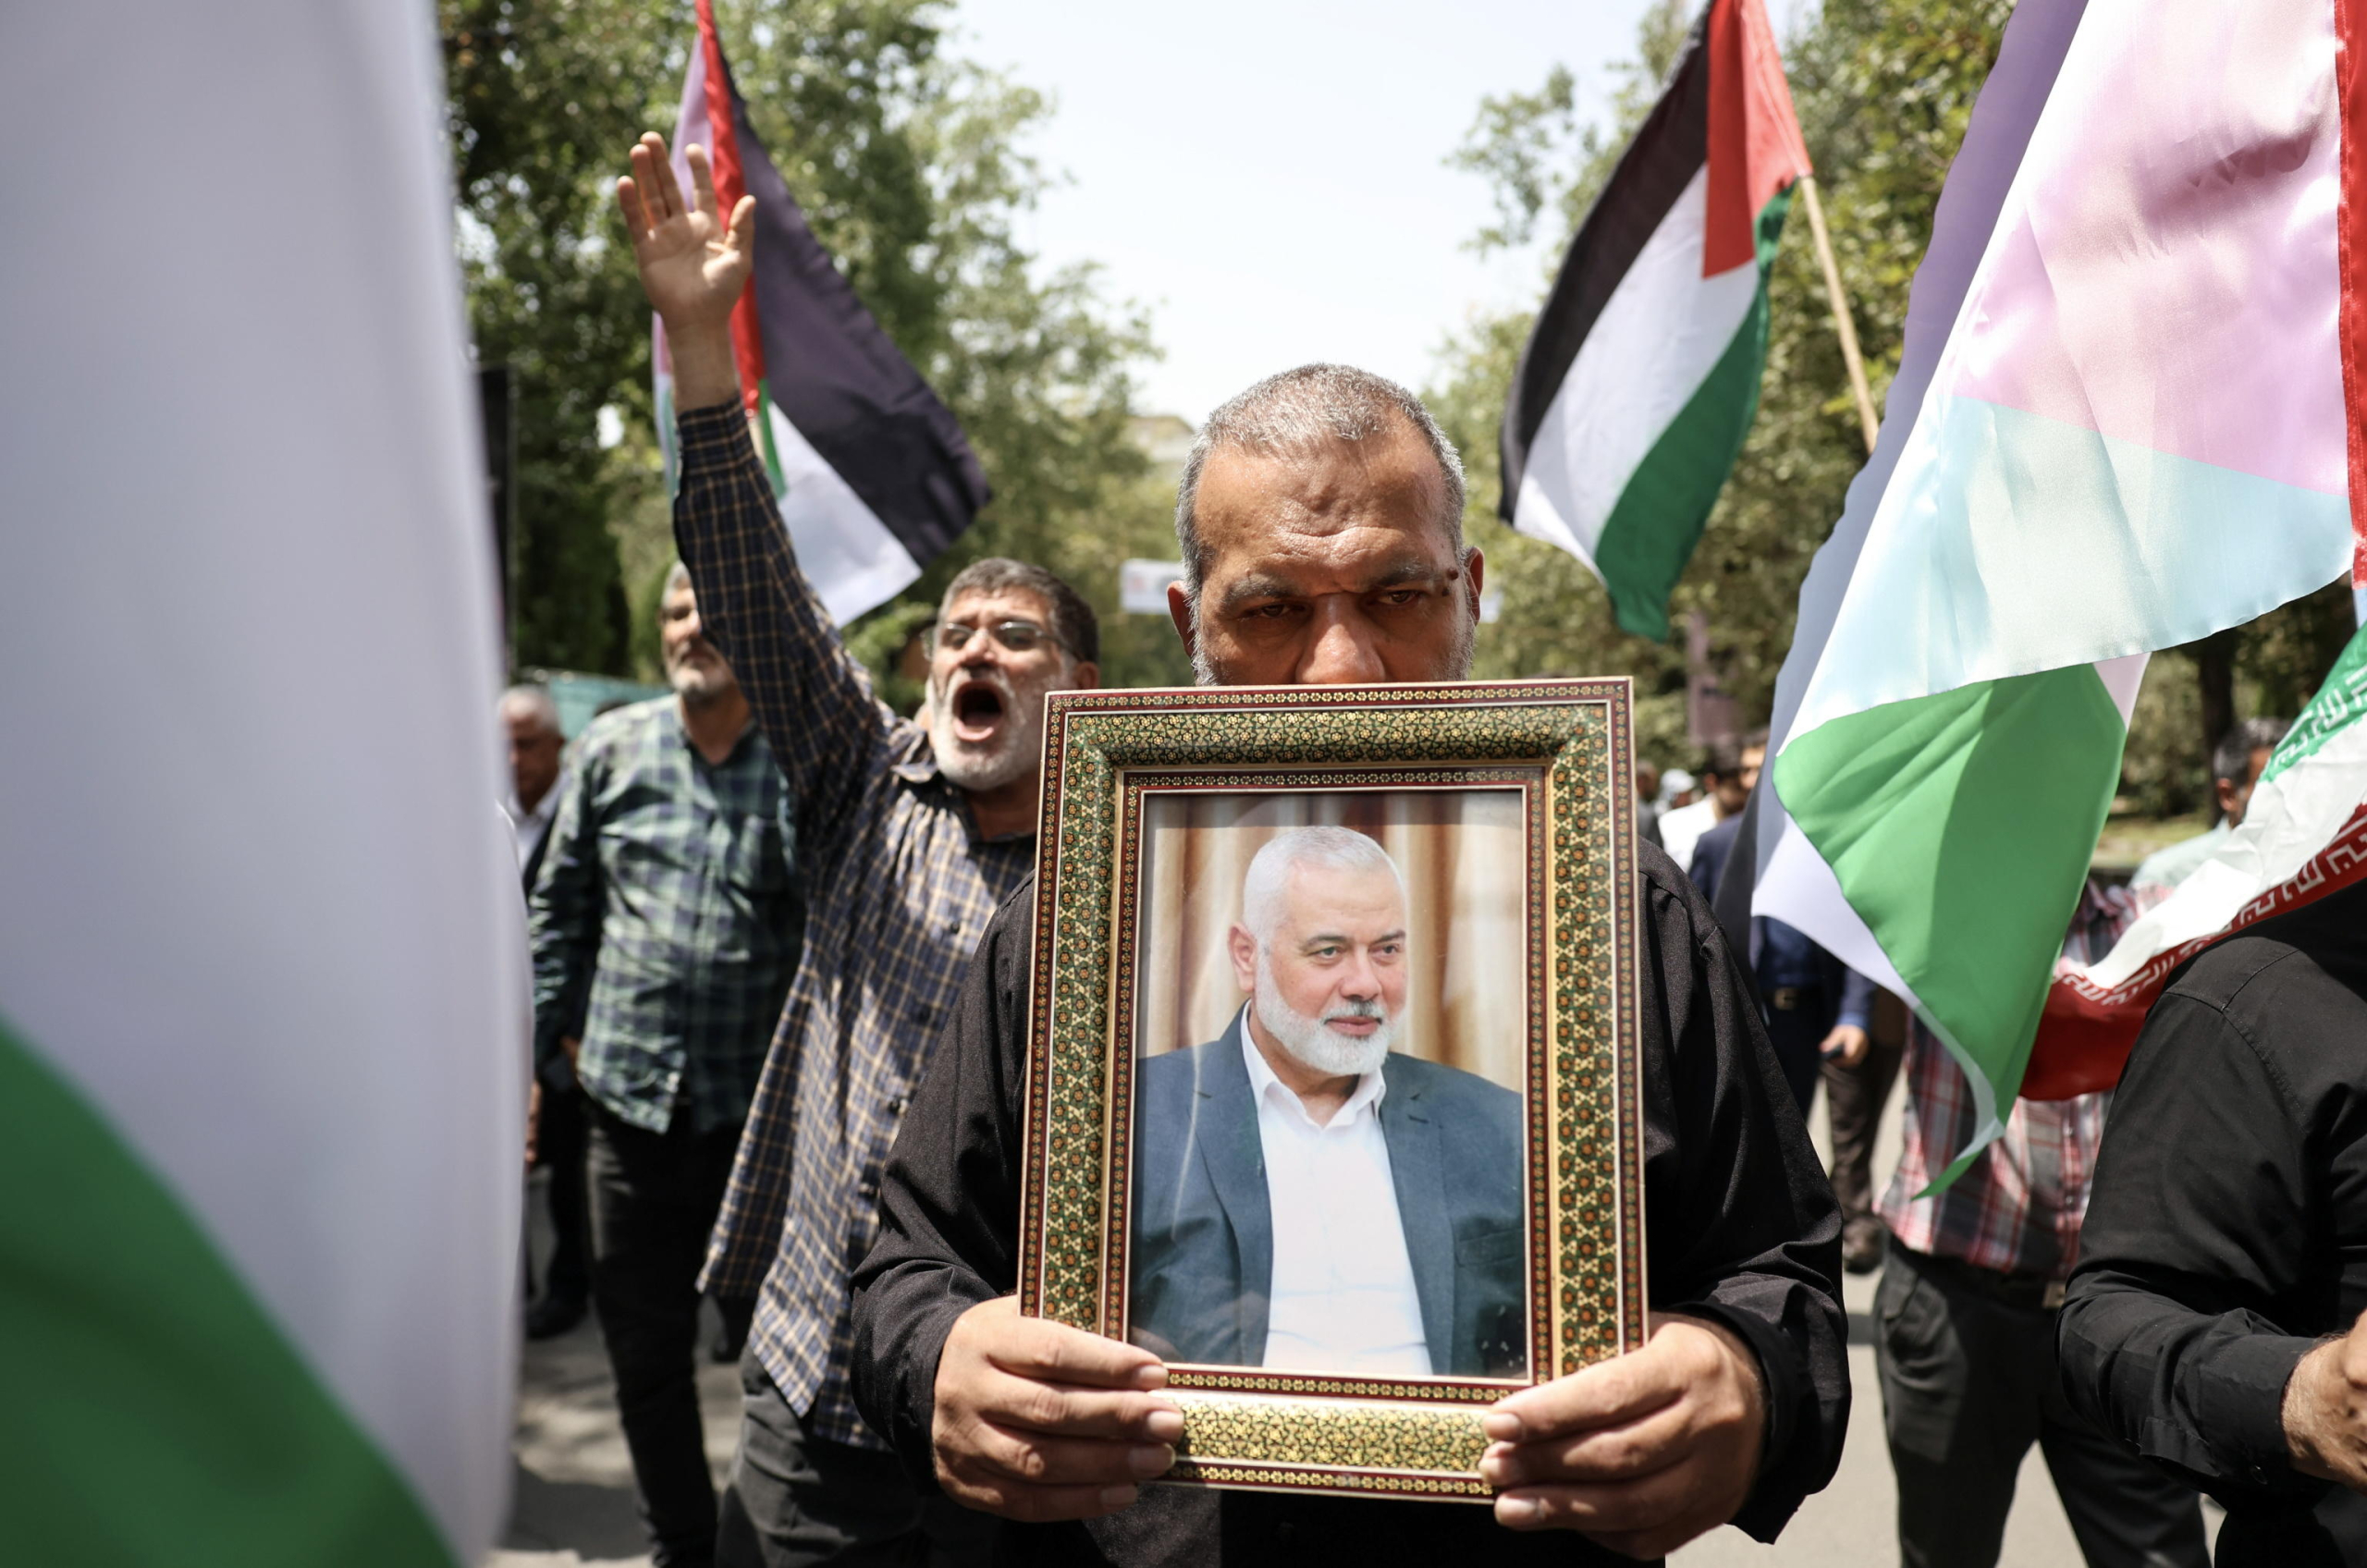 Proteste in Iran per l'uccisione del leader di Hamas Ismail Haniyeh. Foto Ansa EPA/ABEDIN TAHERKENAREH